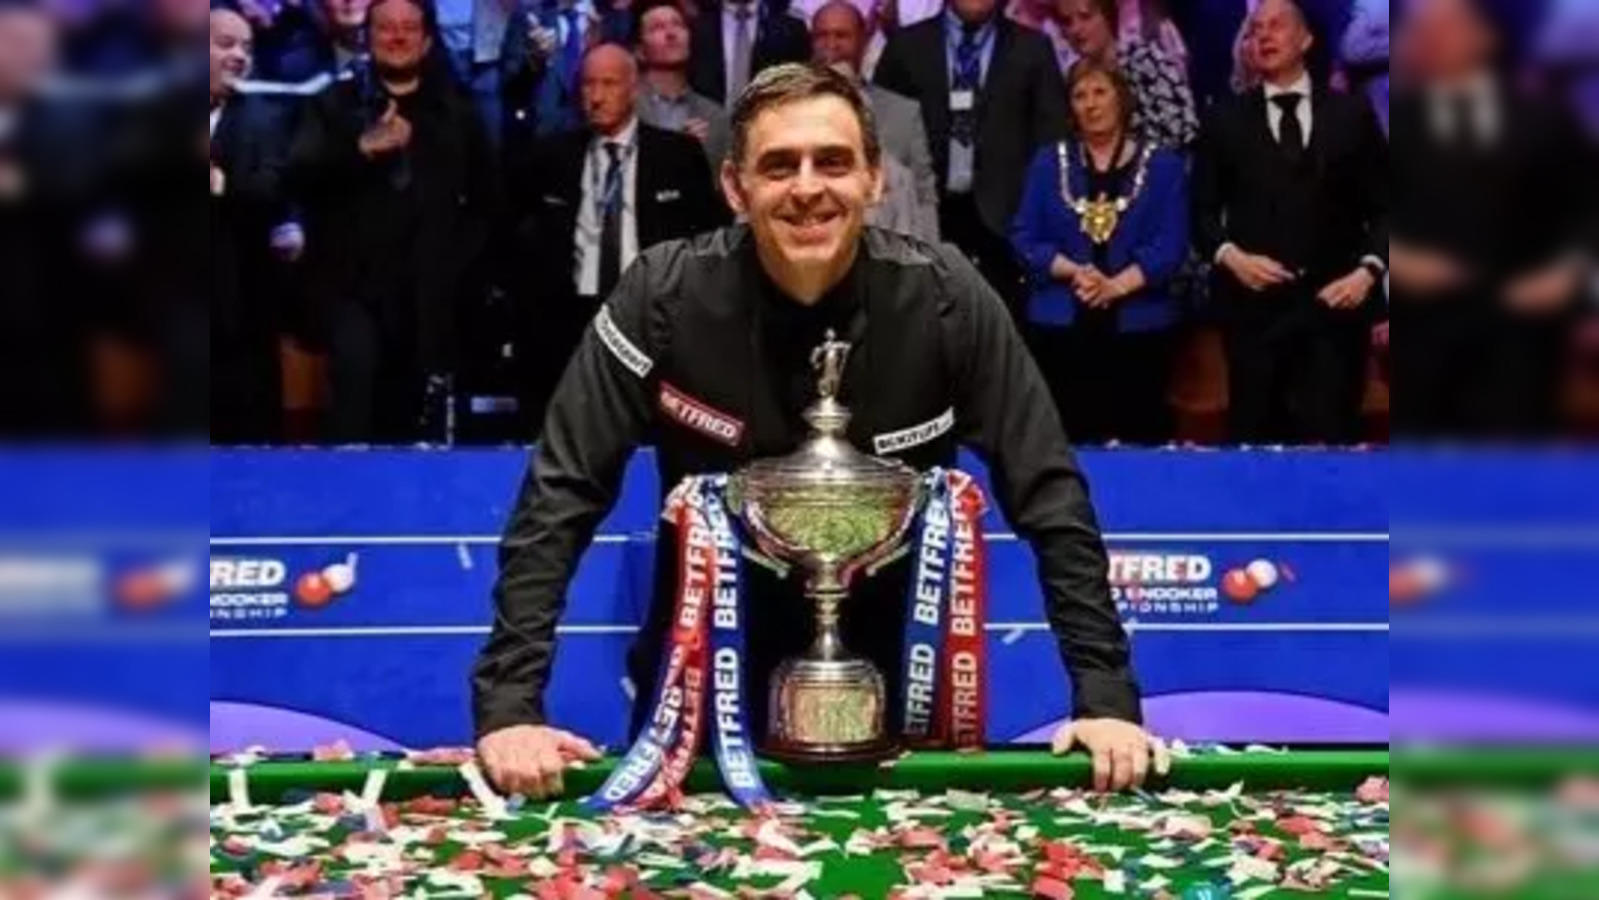 2023 World Snooker Championship is underway - Nelson Policies